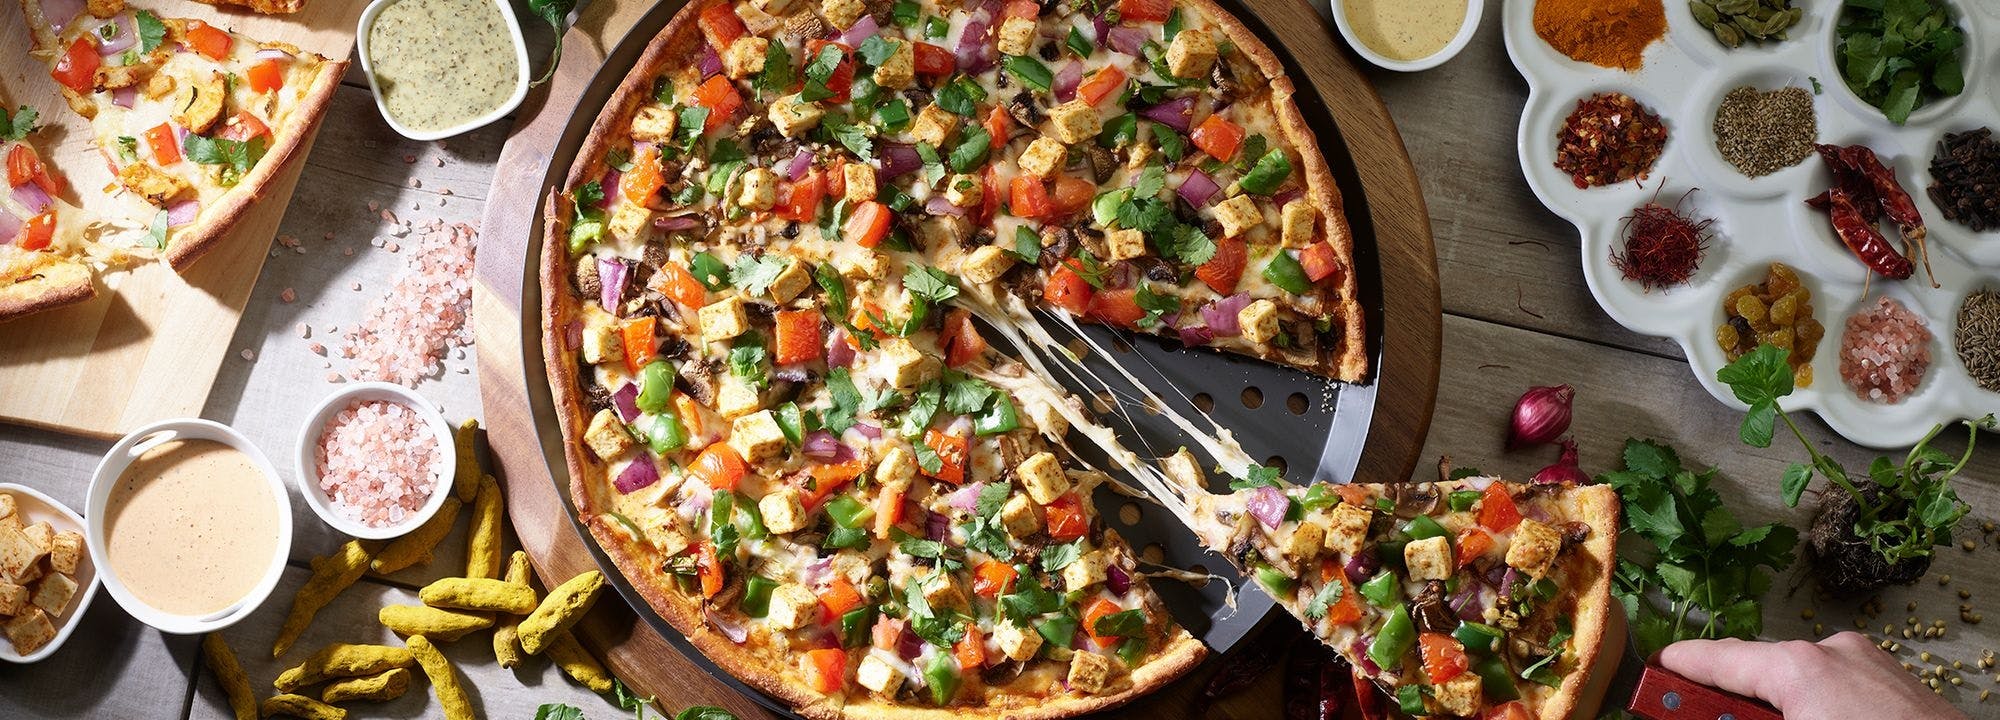 Chicago's Pizza Twist - Ashburn in Fairfax - Highlight